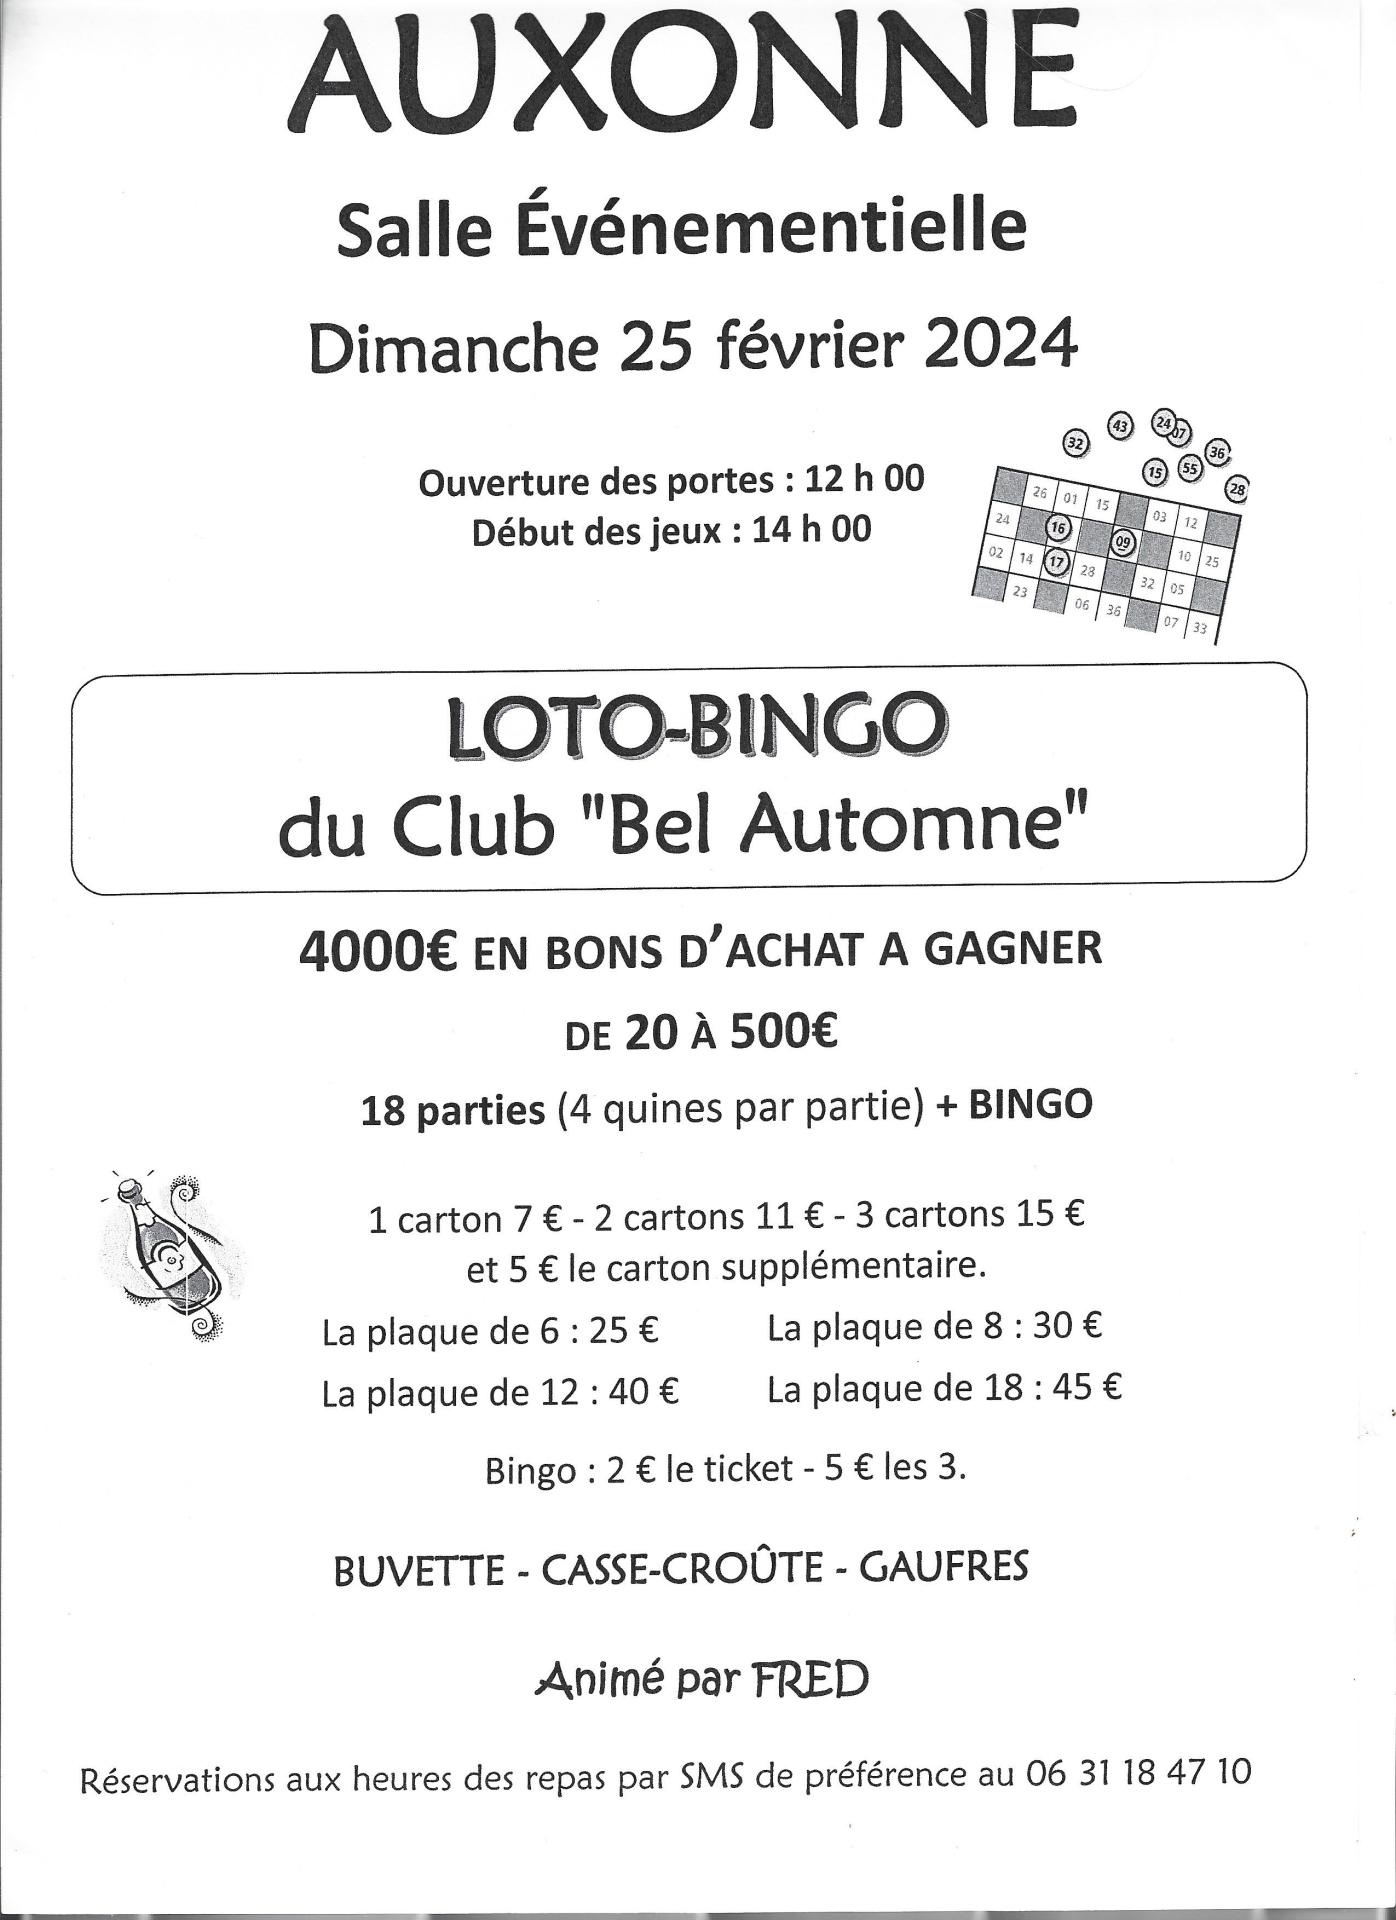 Loto-bingo du Club Bel Automne